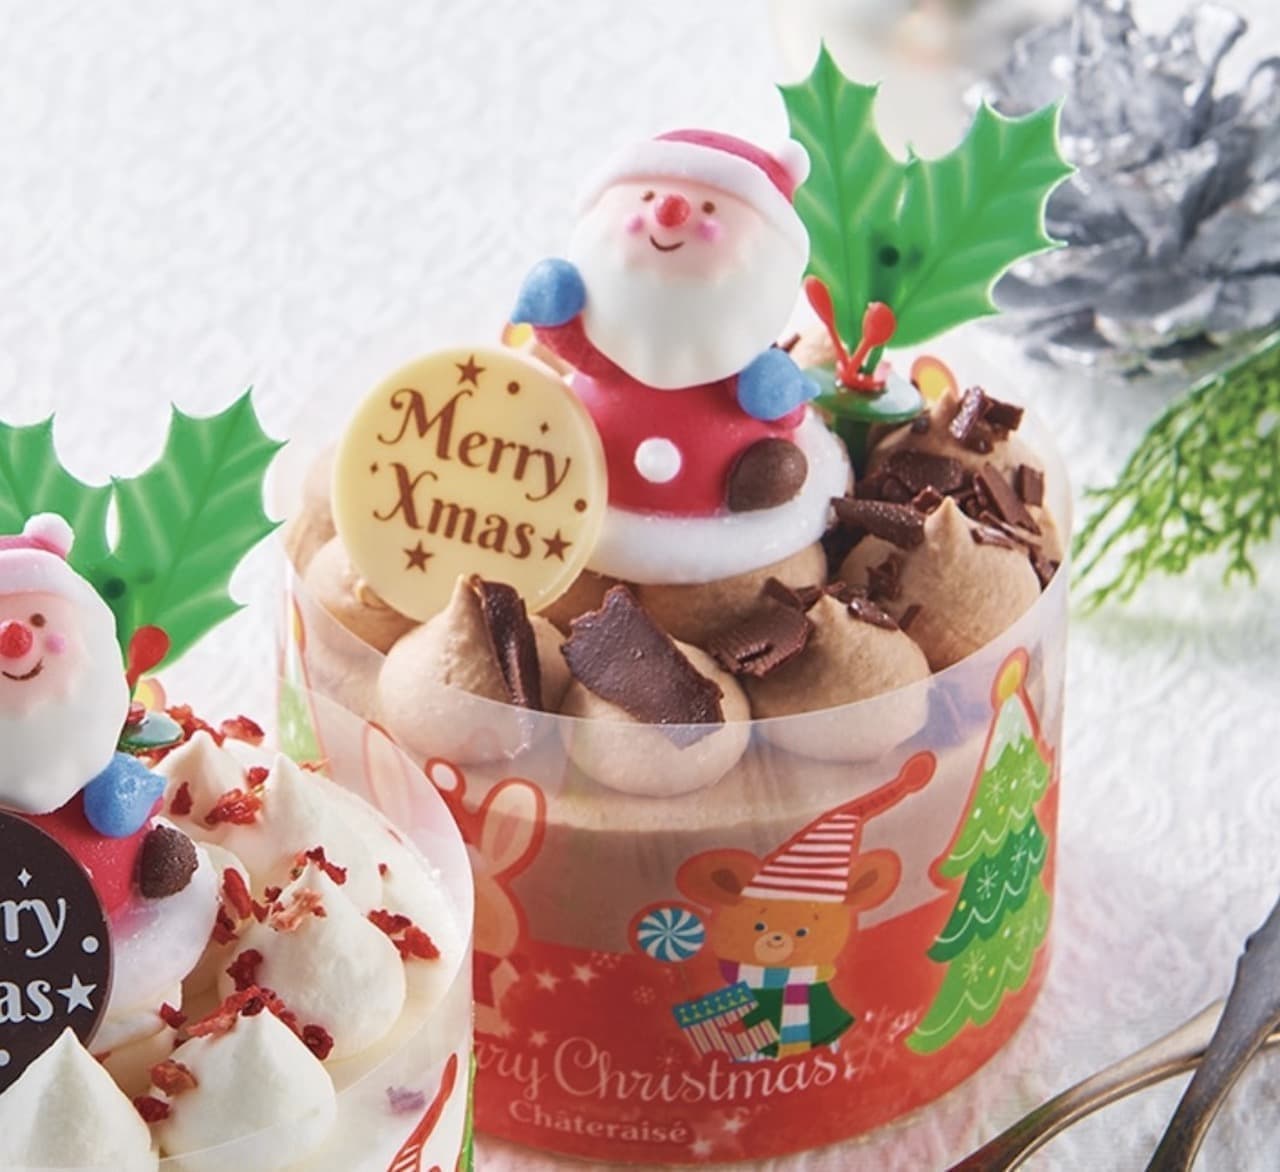 Chateraise "Xmas Happy Santa Claus Chocolate".